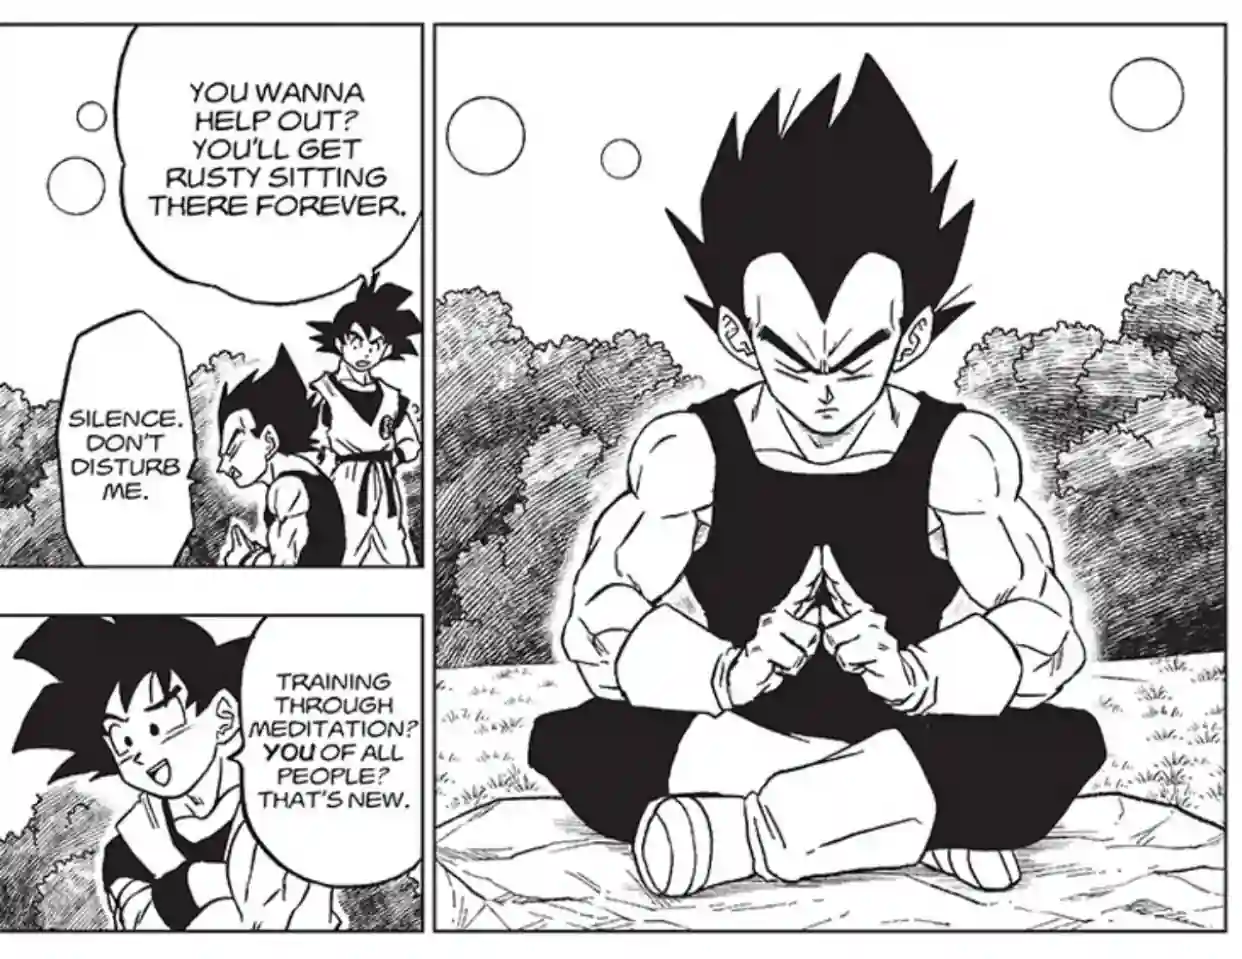 Unlike the movie, Goku recognizes meditation as training in the Dragon Ball Super manga